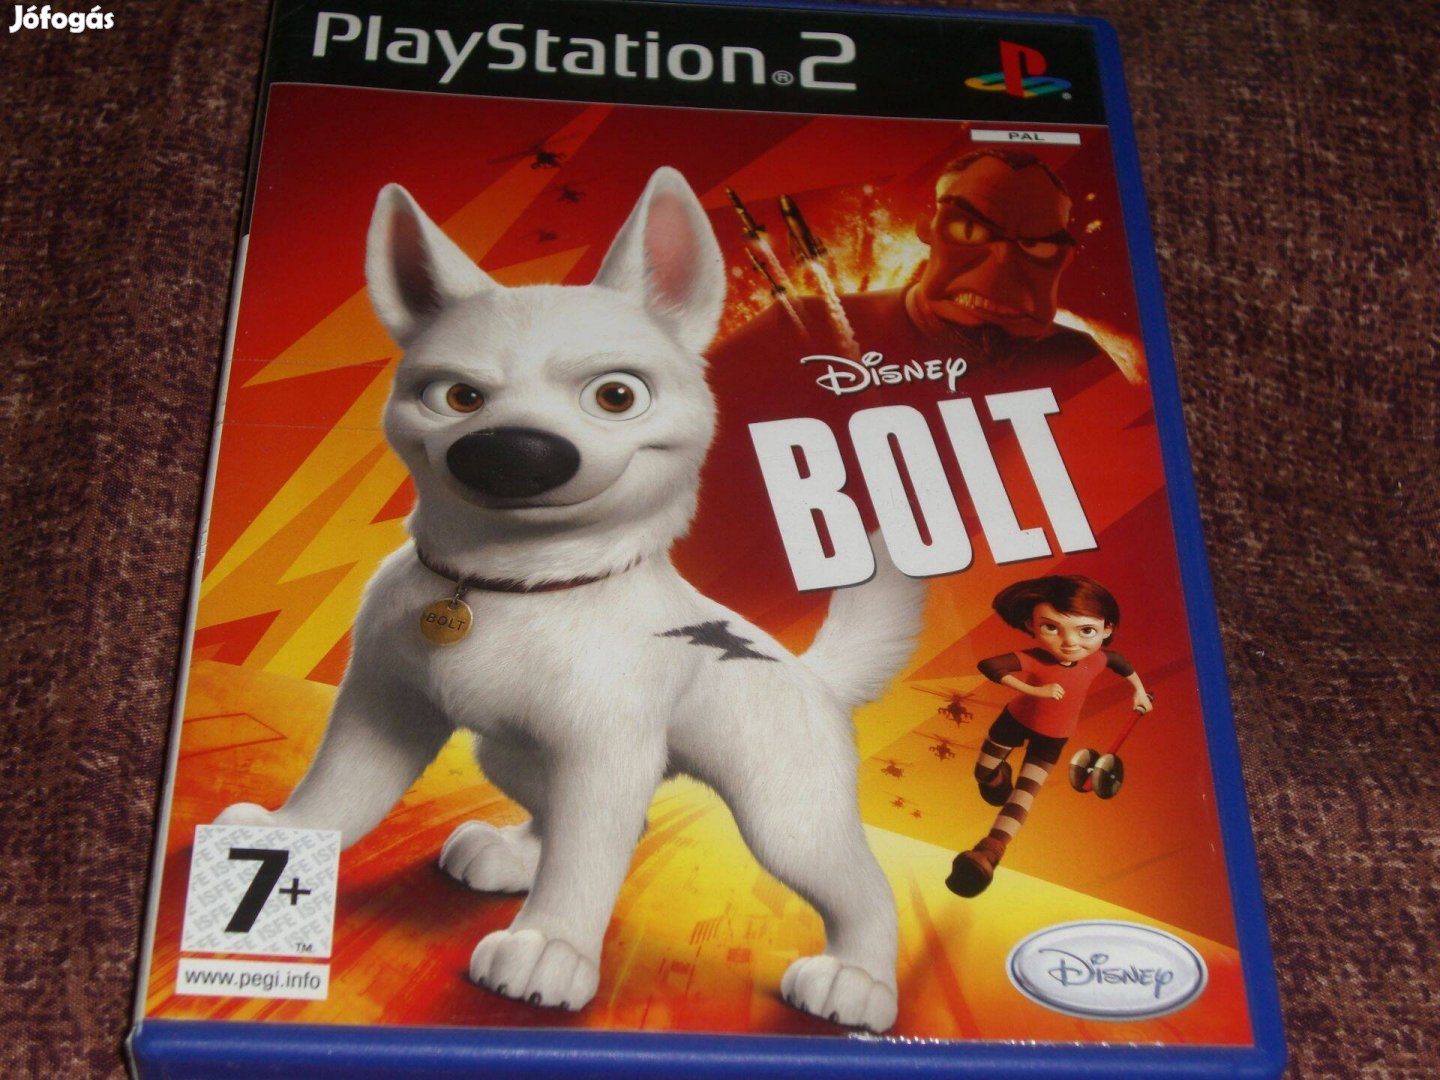 Bolt eredeti Playtation 2 lemez ( 3500 Ft)